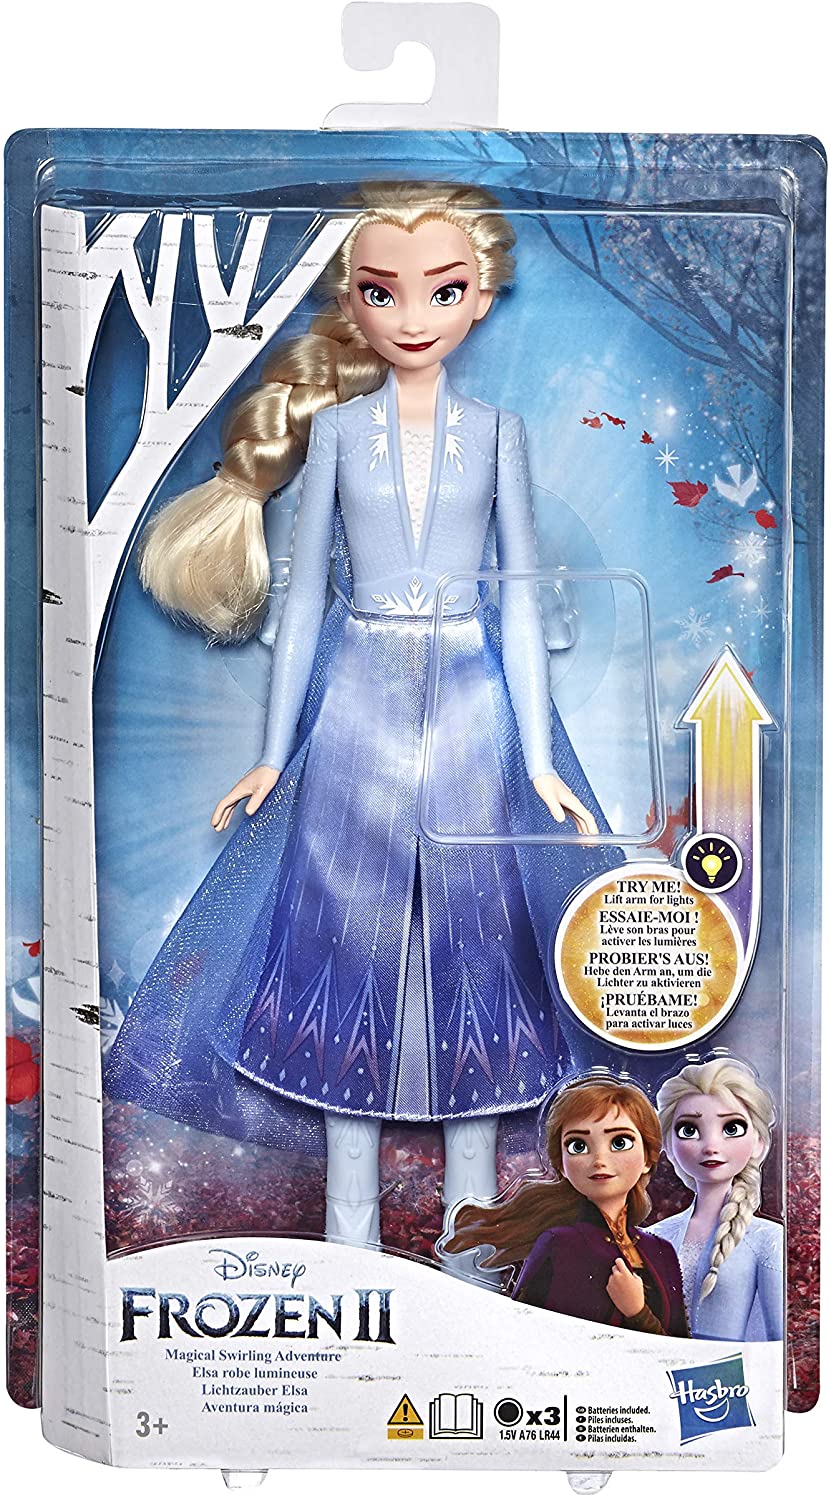 Disney Frozen Elsa Magical Swirling Adventure Fashion Doll che si illumina, ispirata al film Disney Frozen 2